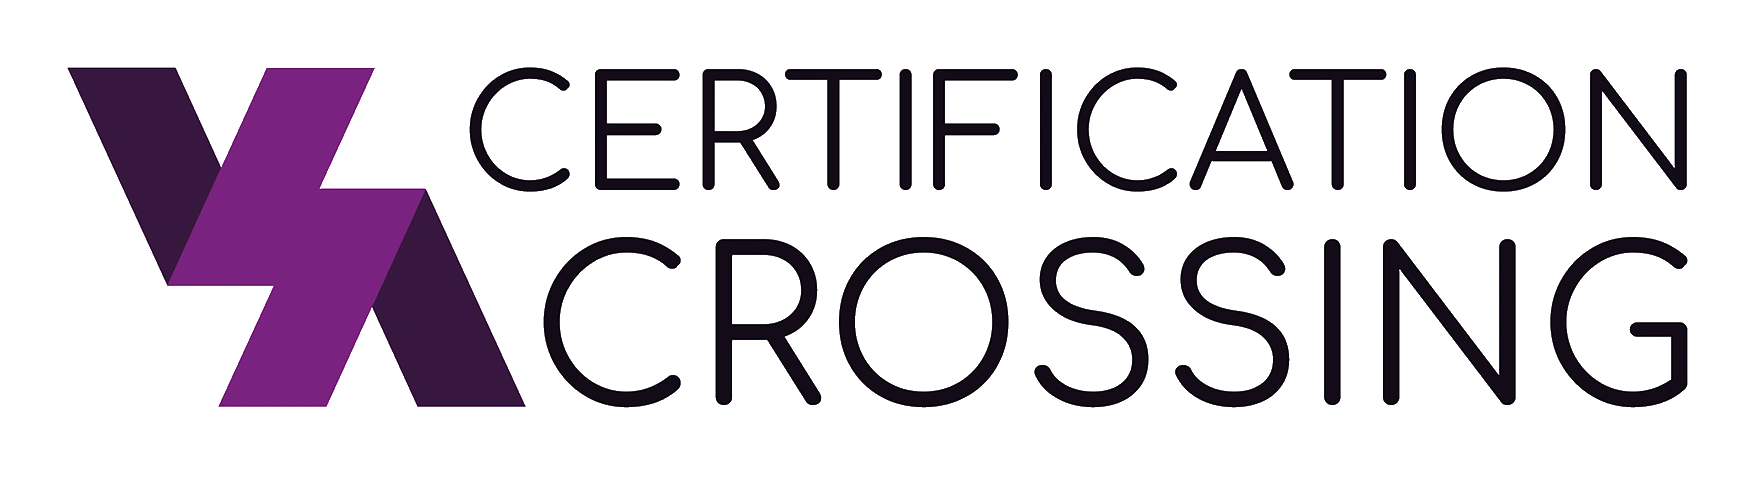 Certification Crossing logo